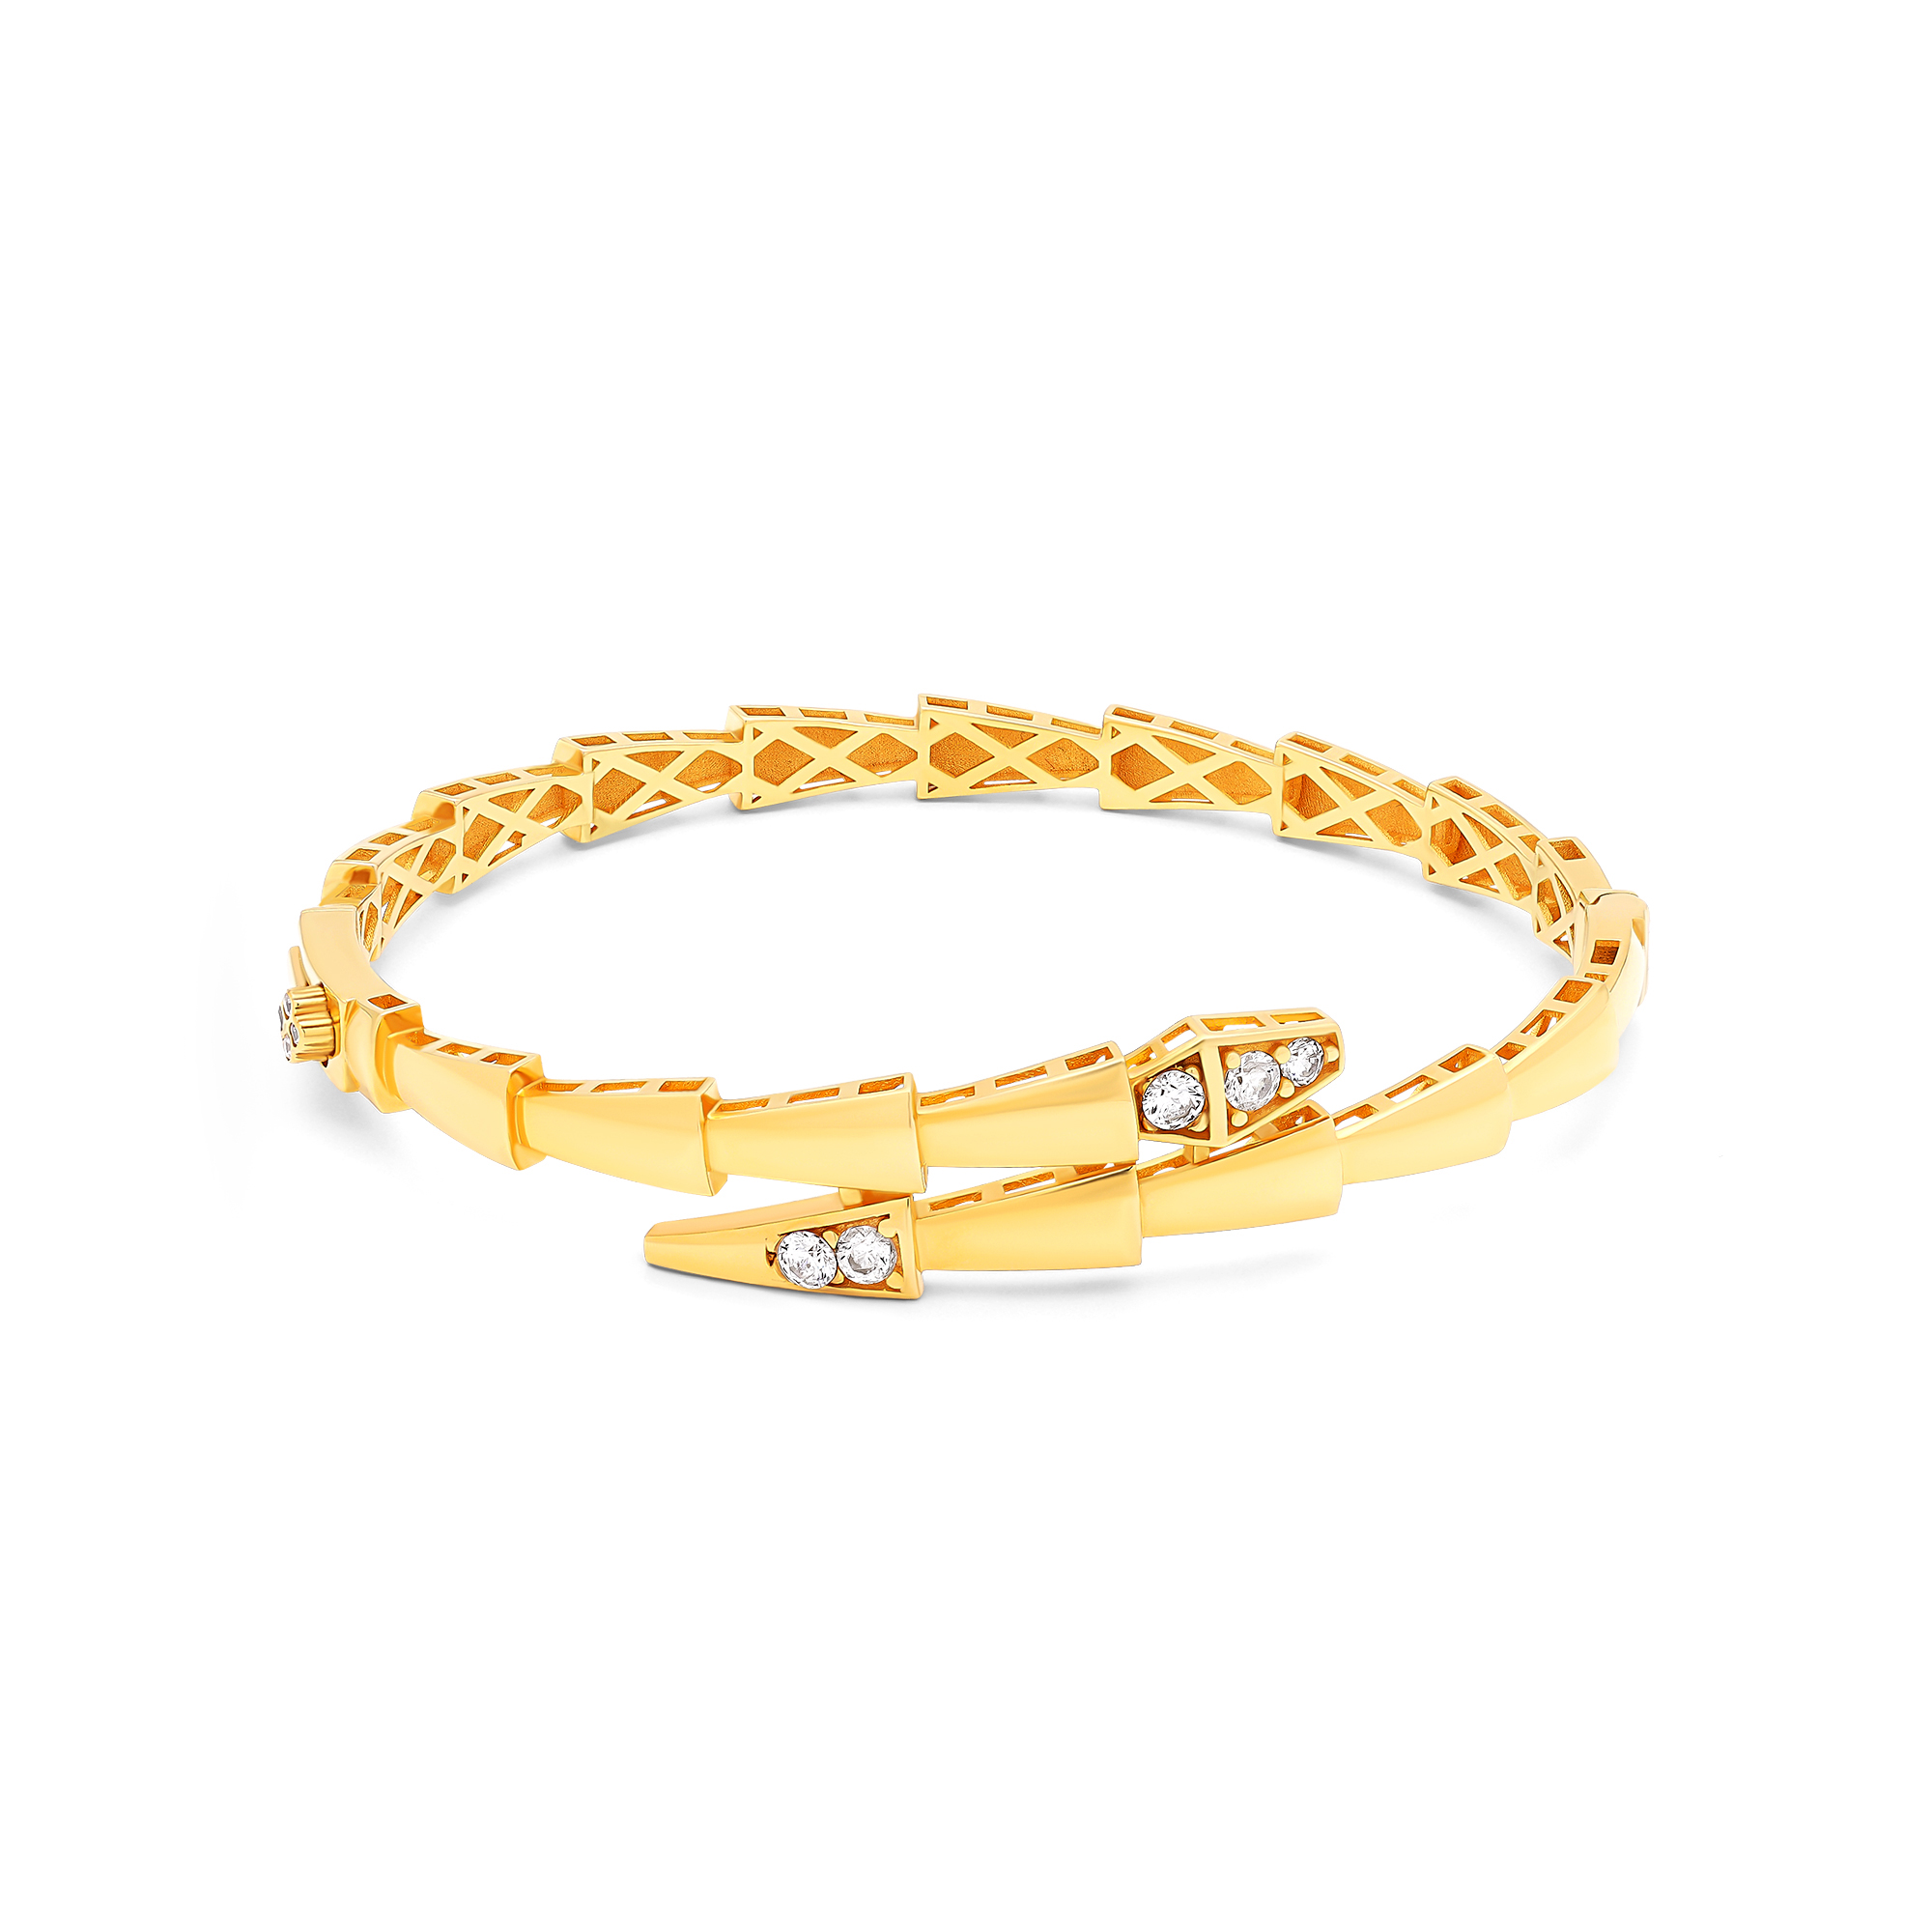 22K Gold Bracelet for Women with Cz & Ruby - 235-GBR2623 in 13.150 Grams